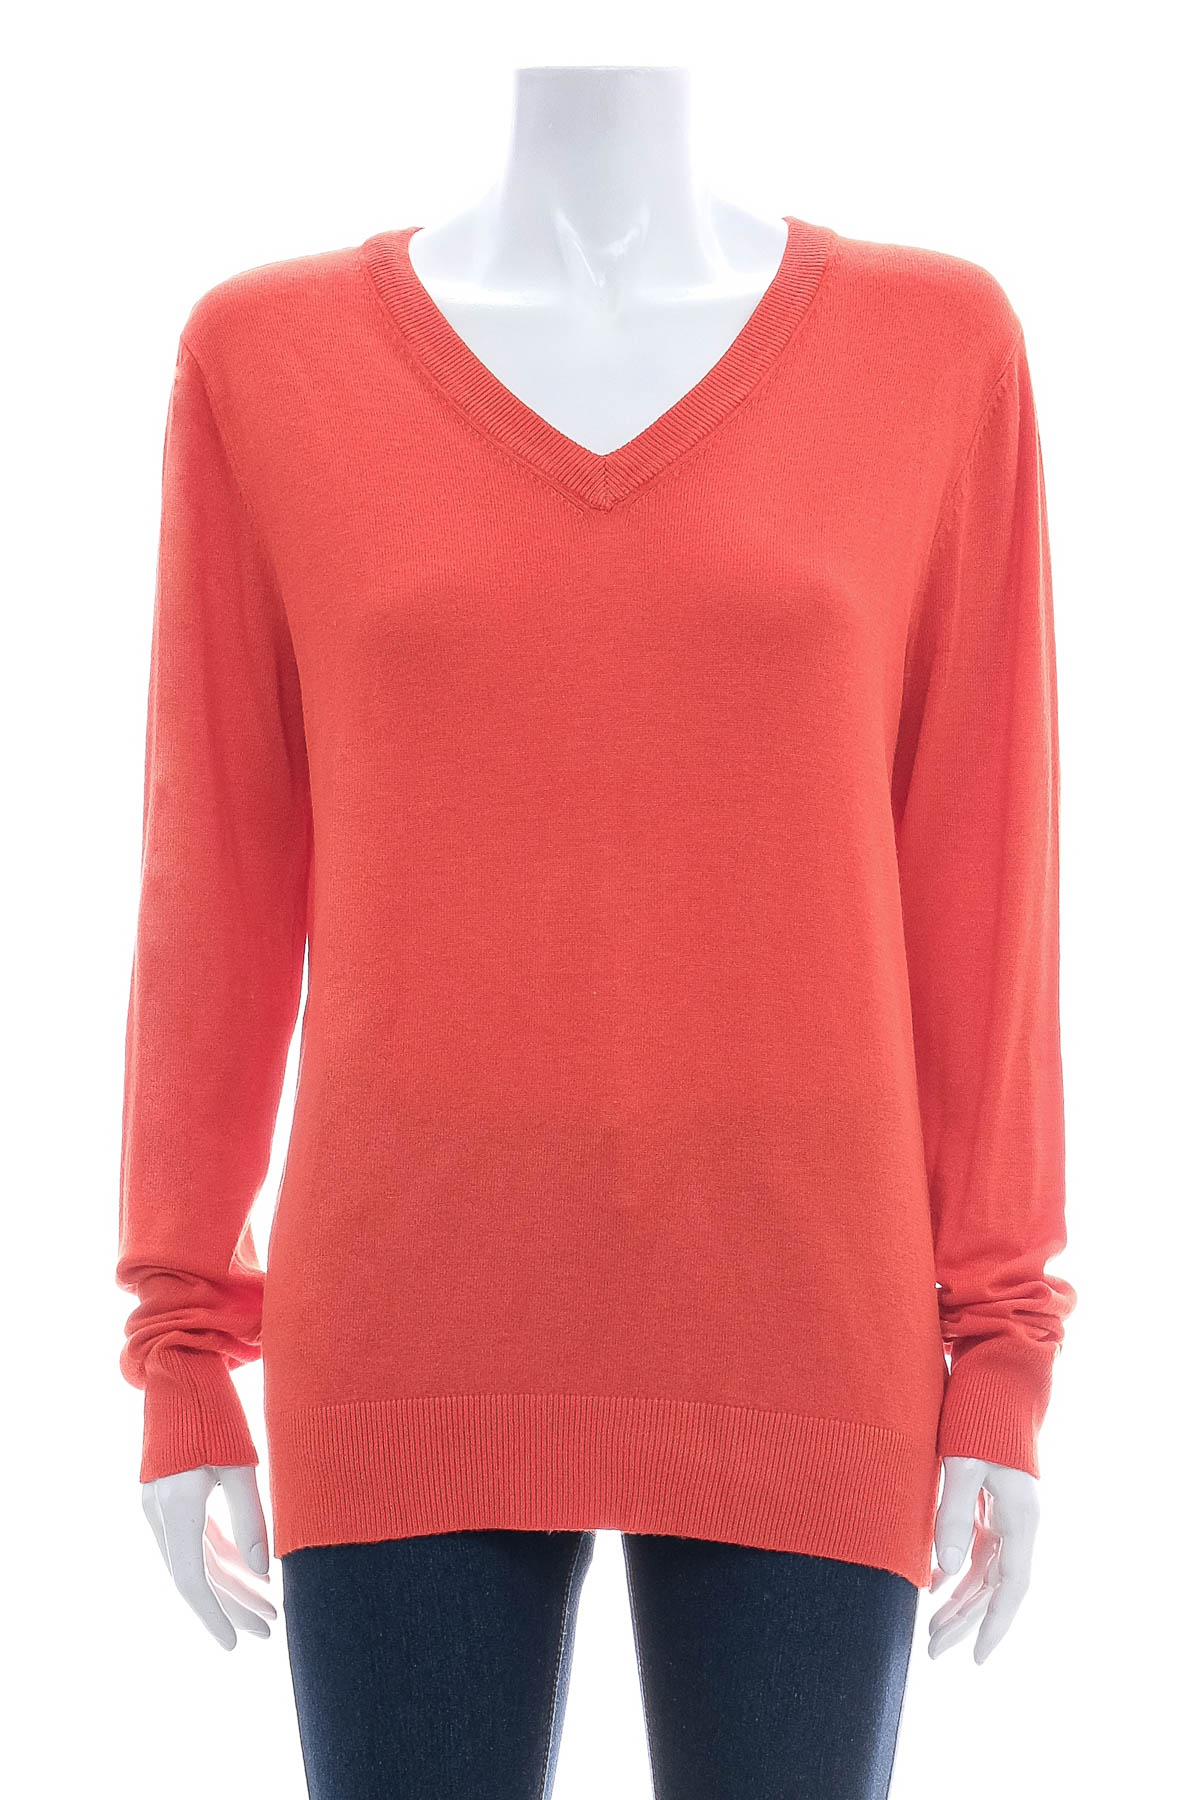 Women's sweater - Laura T. - 0